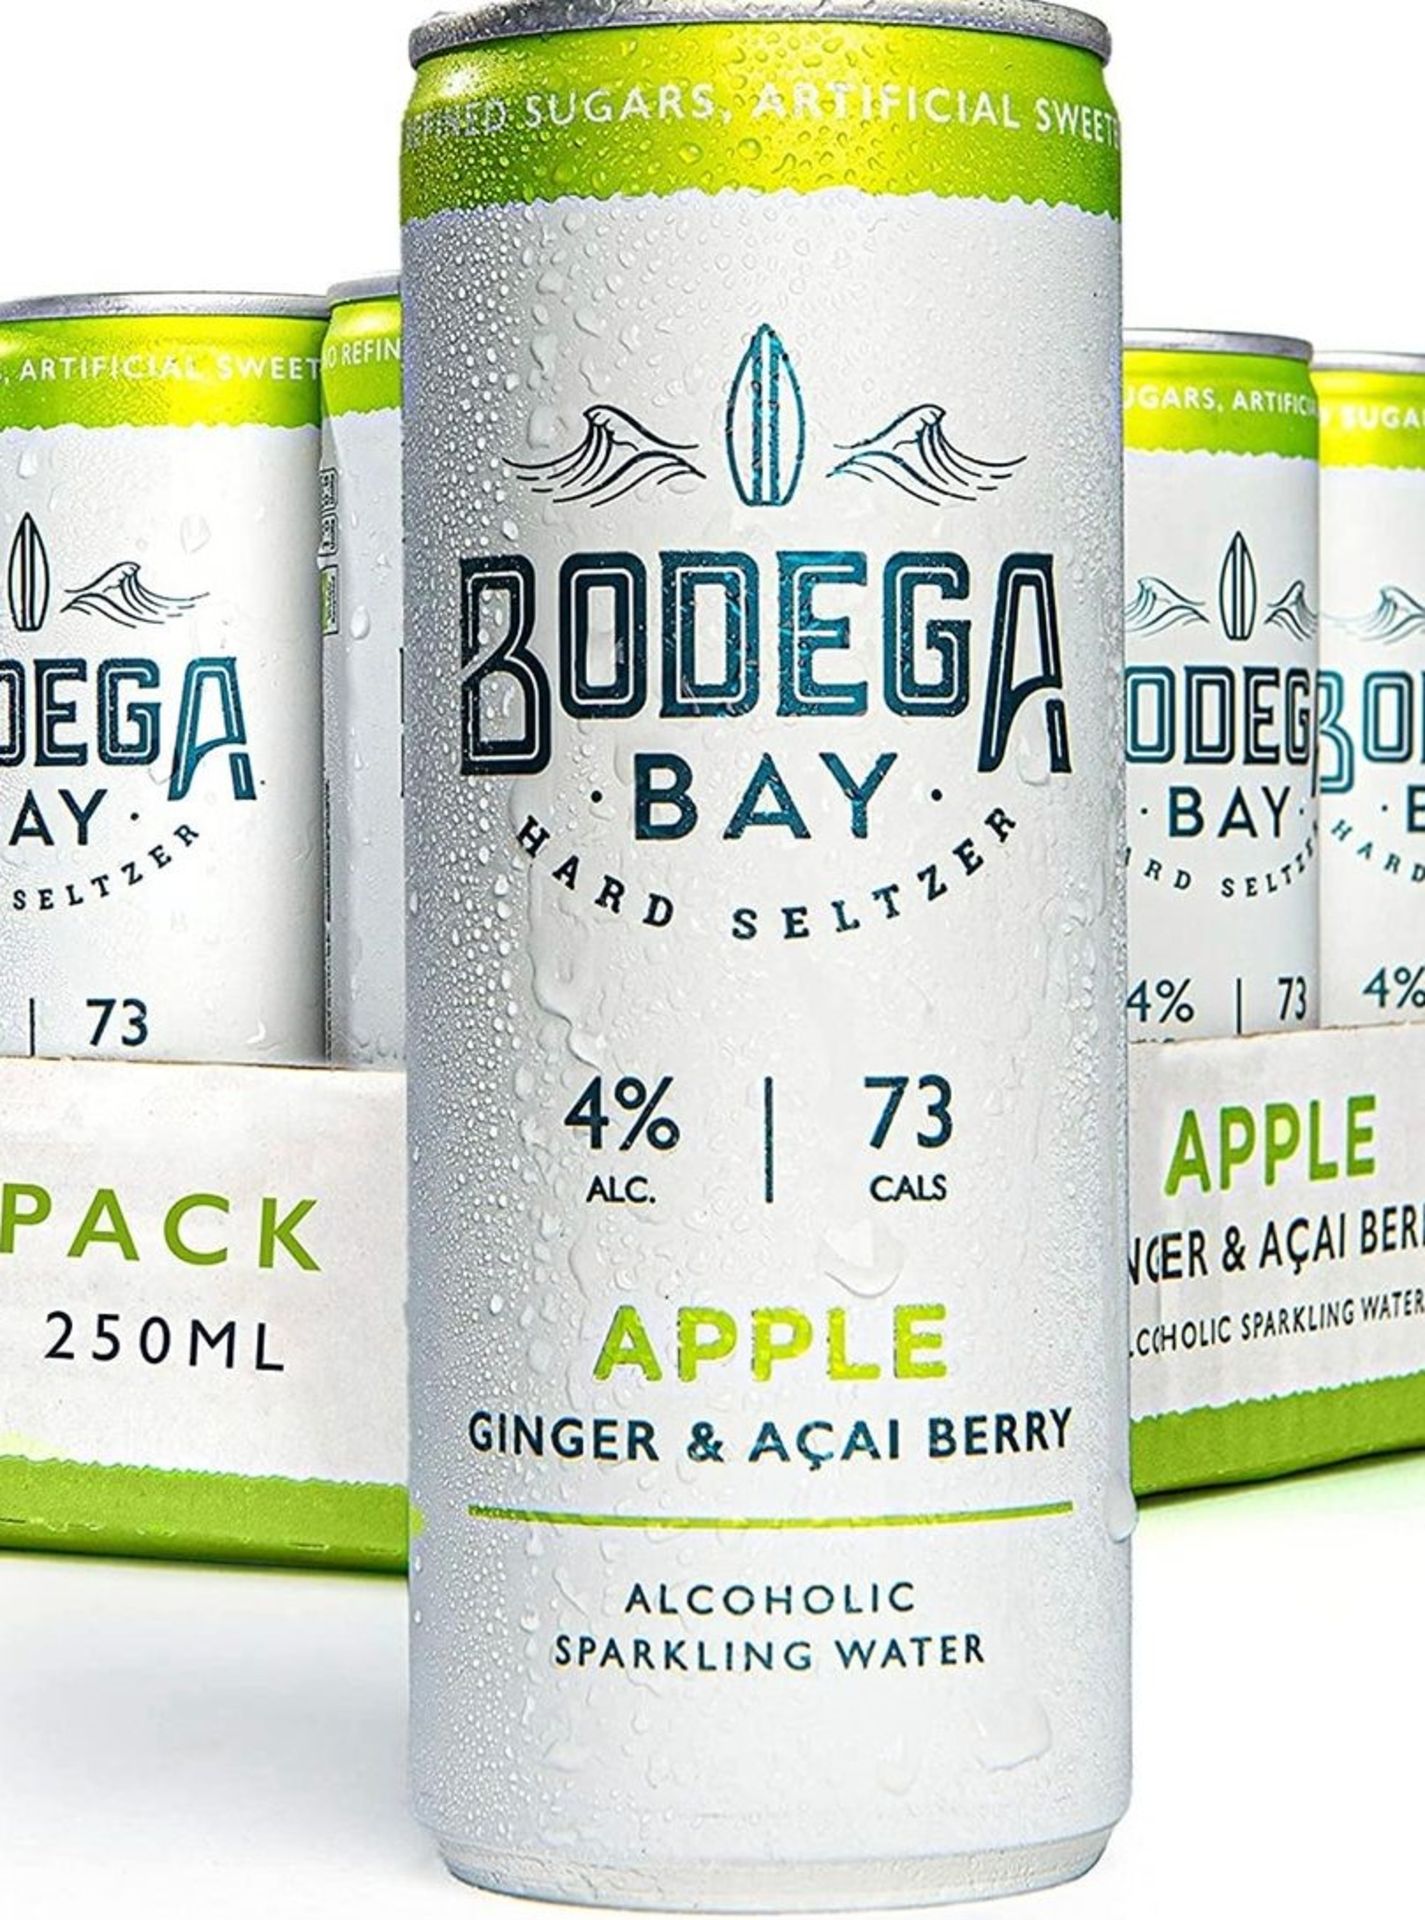 24 x Bodega Bay Hard Seltzer 250ml Alcoholic Sparkling Water Drinks - Apple Ginger & Acai Berry - 4% - Image 4 of 9